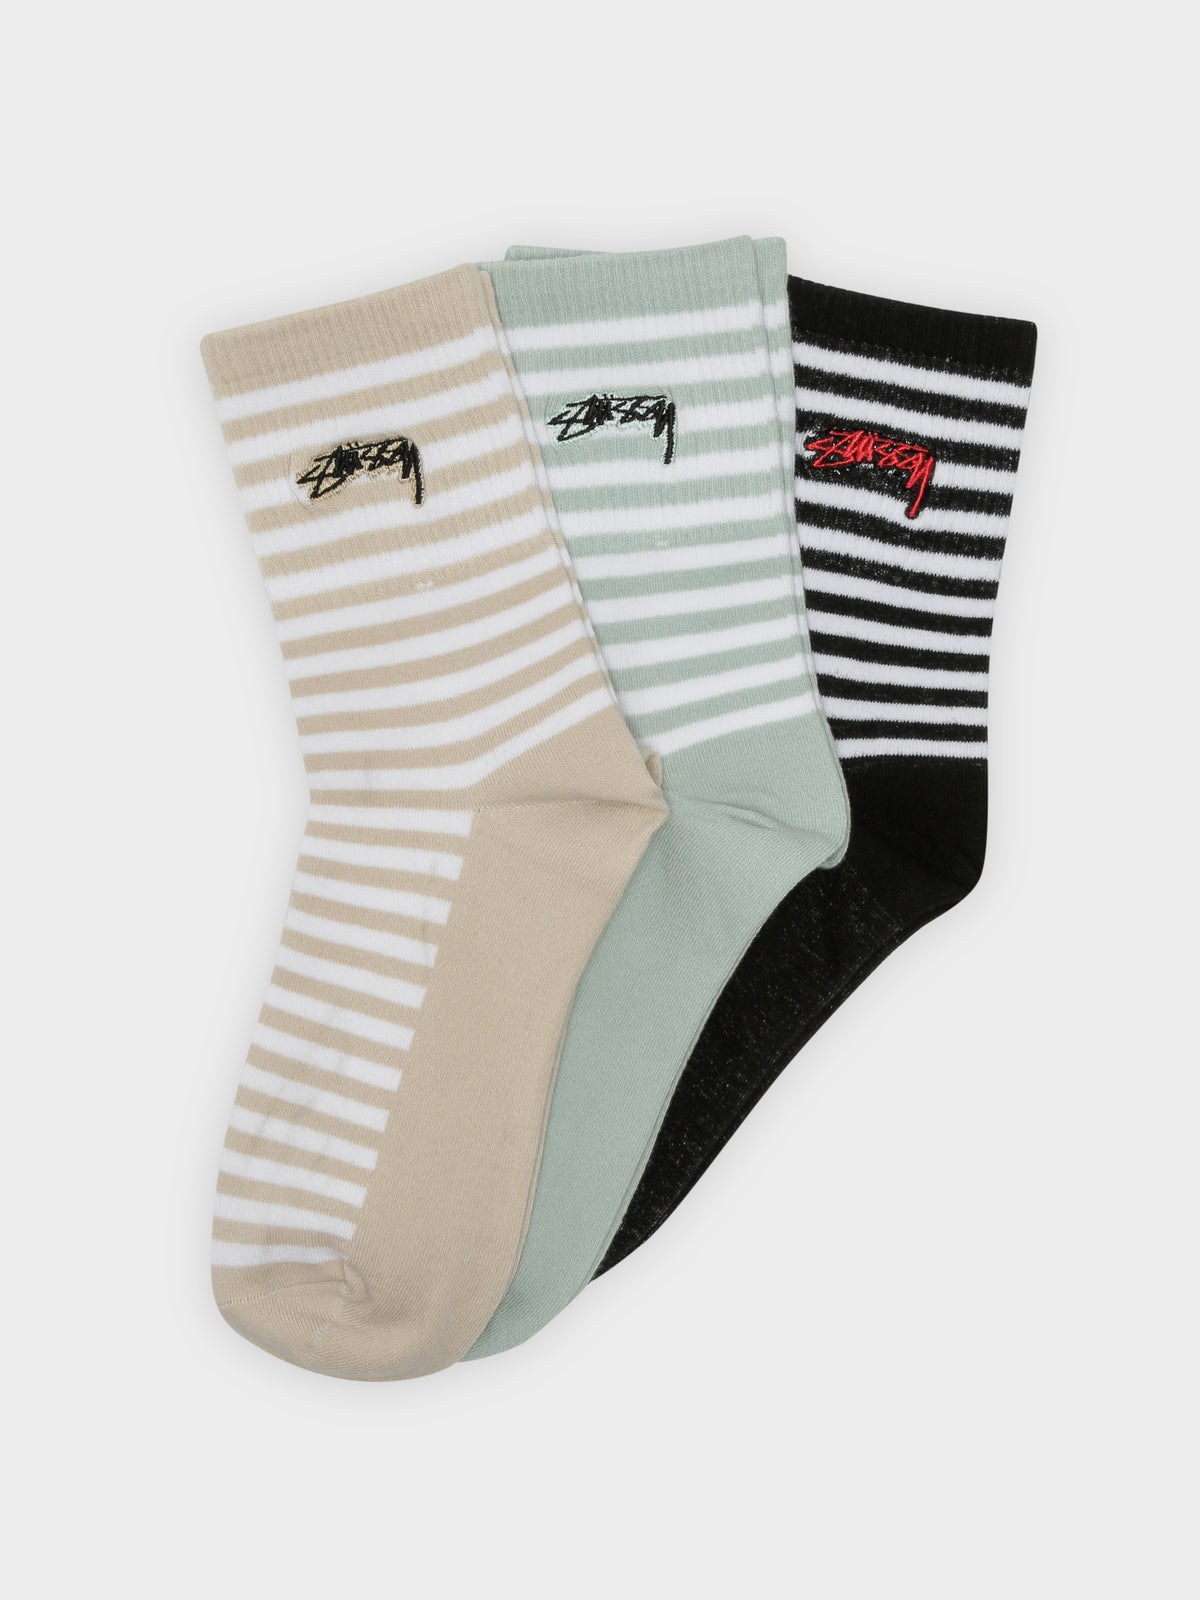 3 Pairs of Authentic Fine Line Crew Socks in Stripe